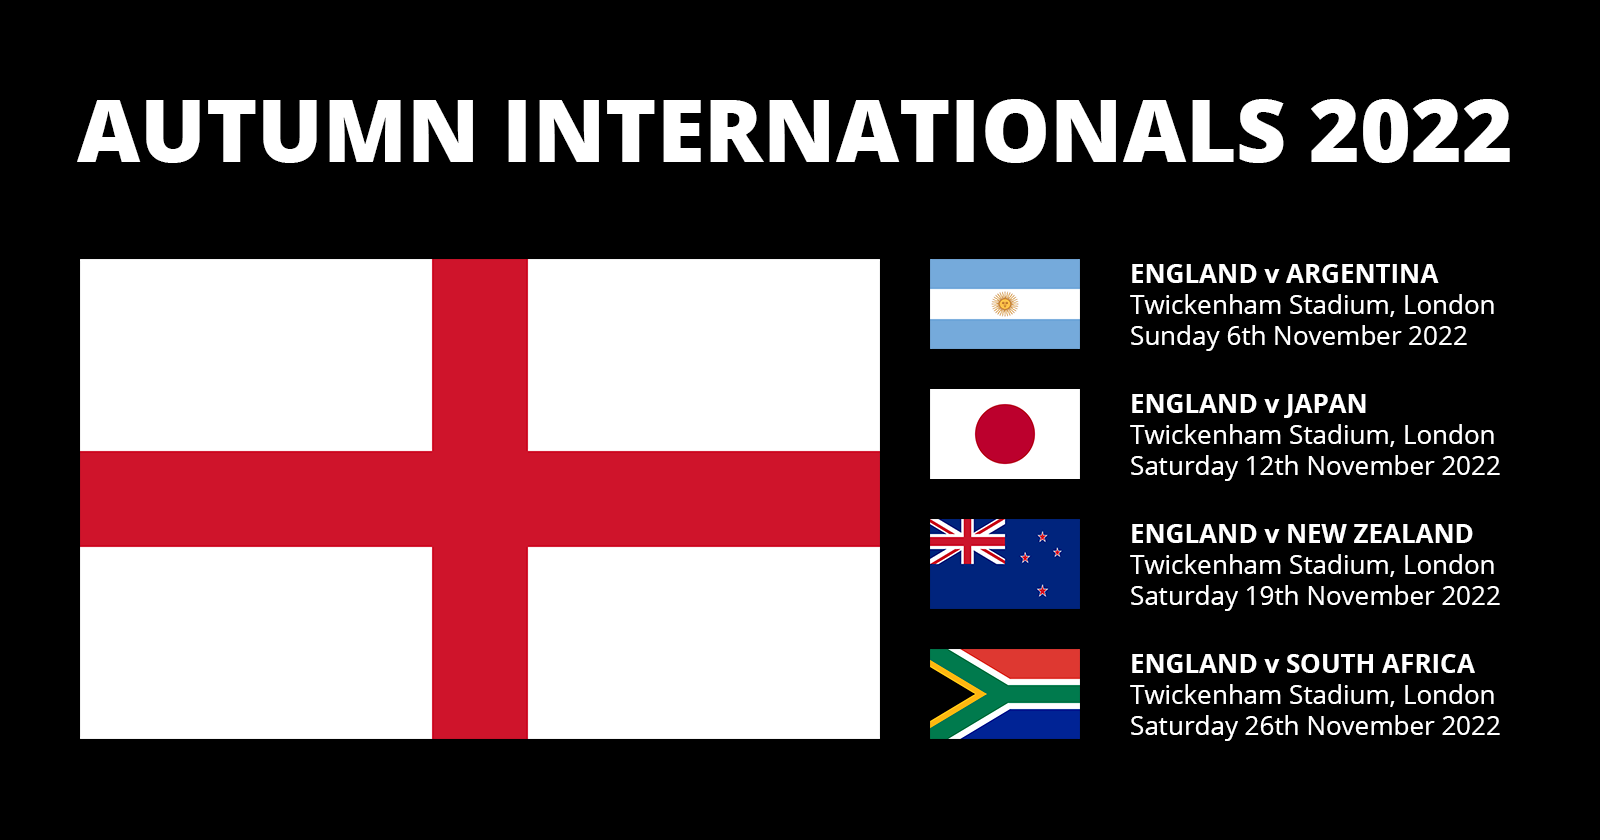 England Autumn Internationals 2022 Rugby Fixtures